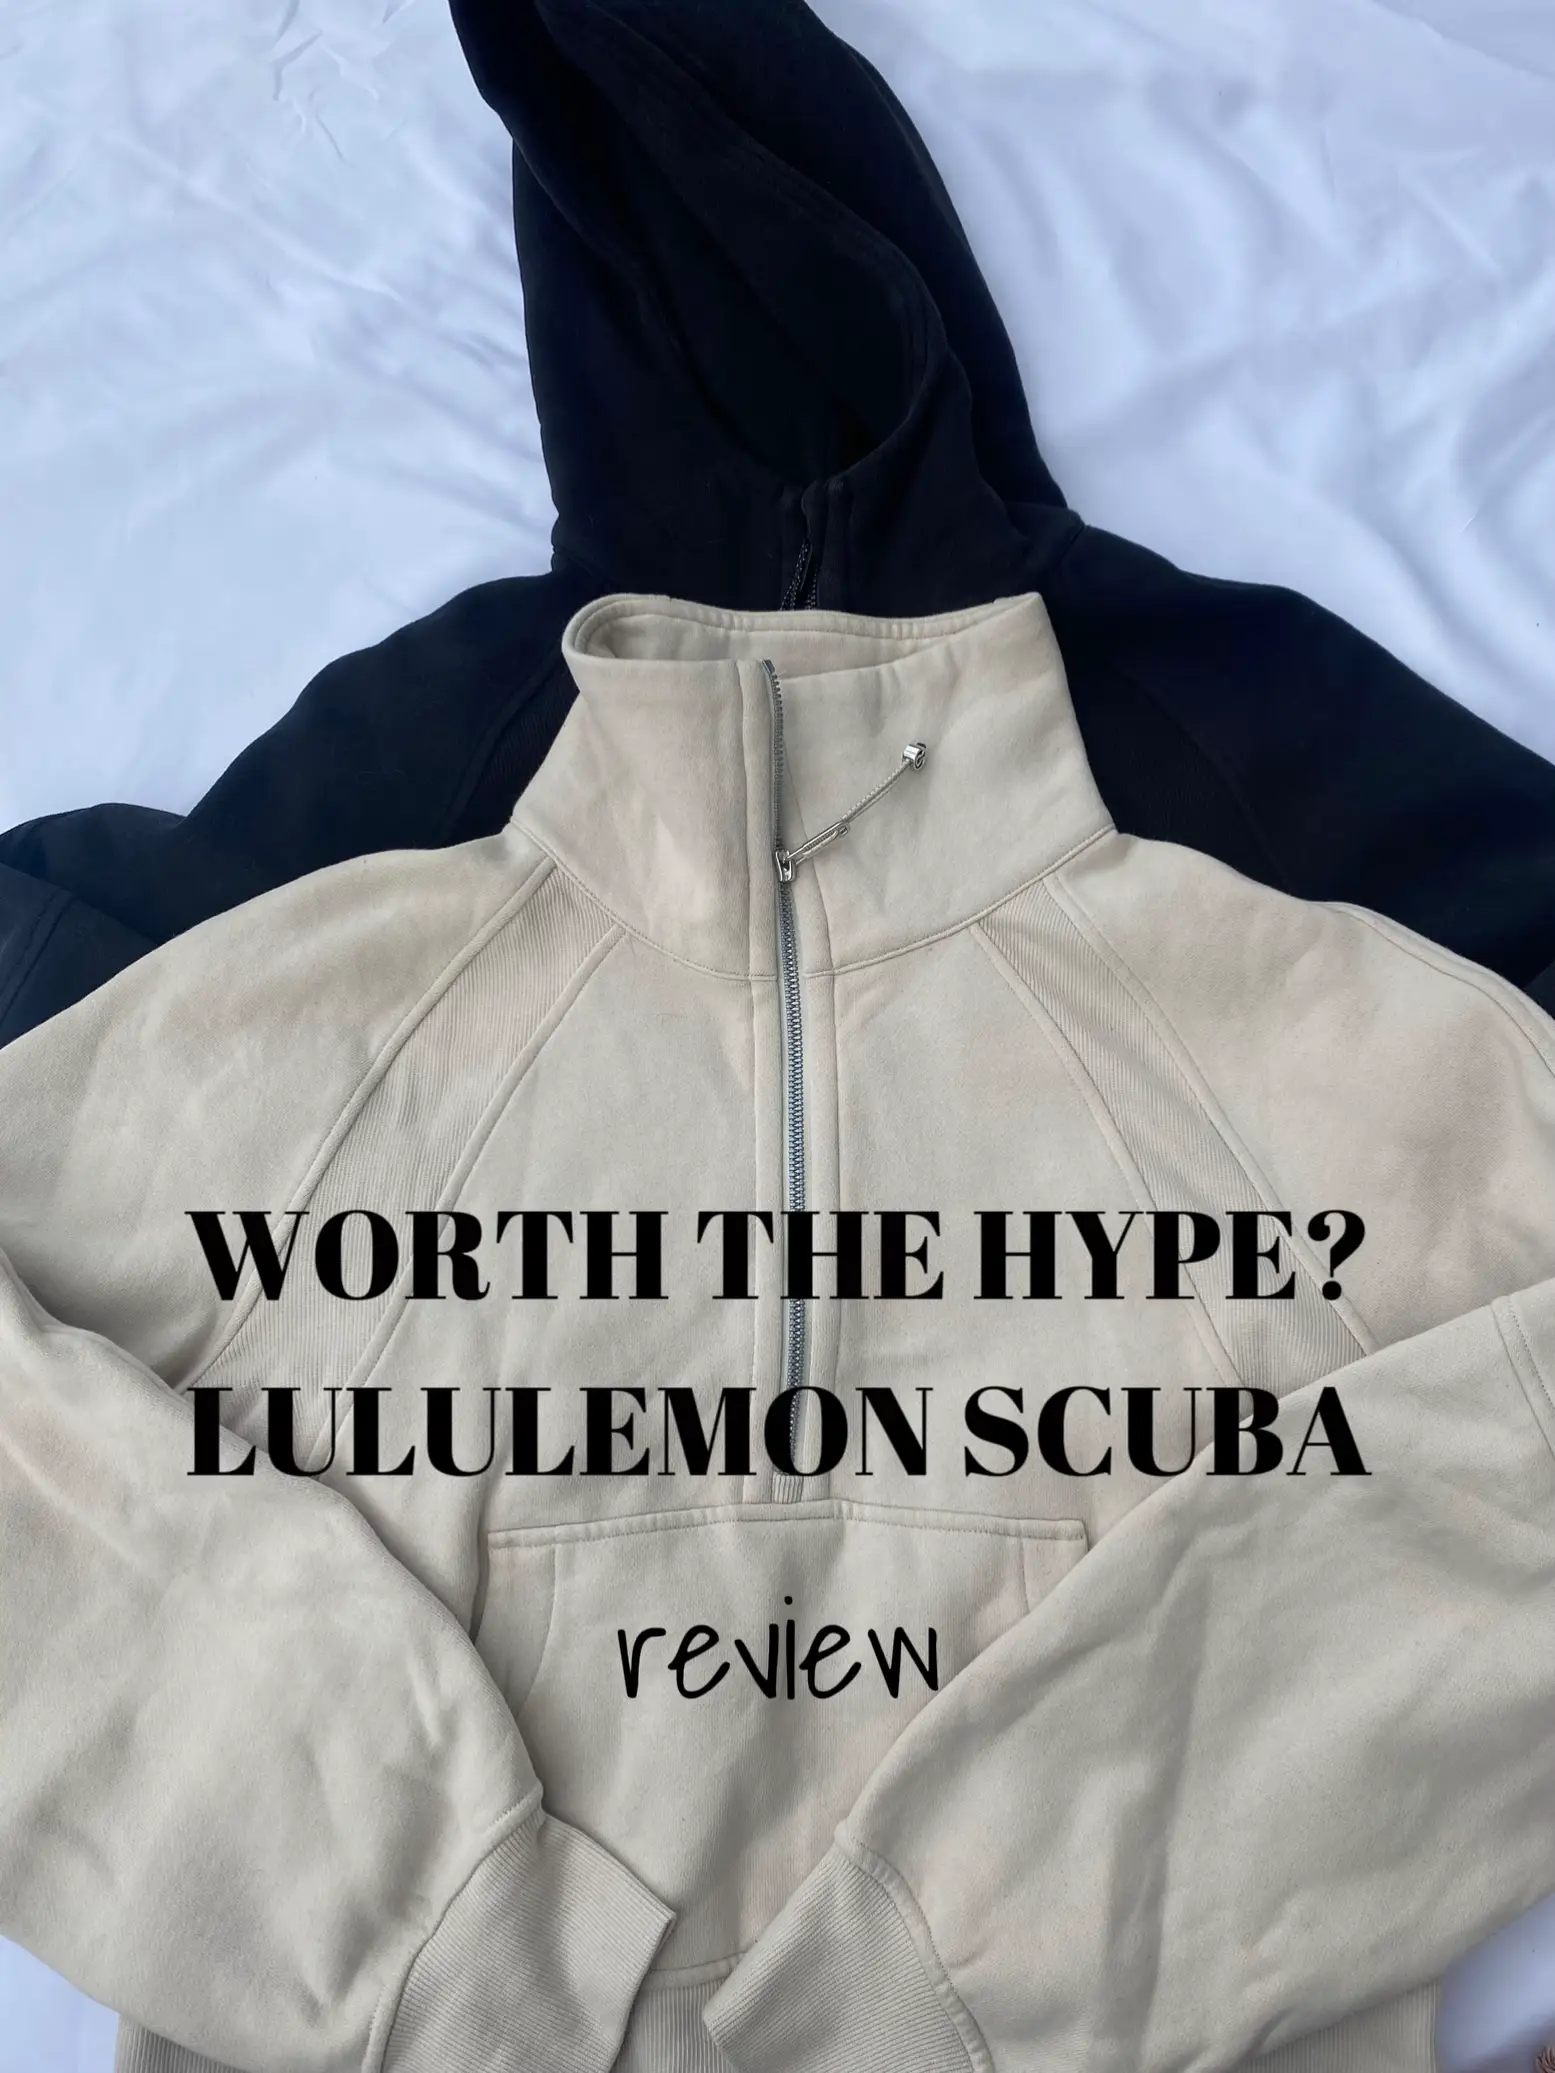 worth the hype?: Lululemon Scuba